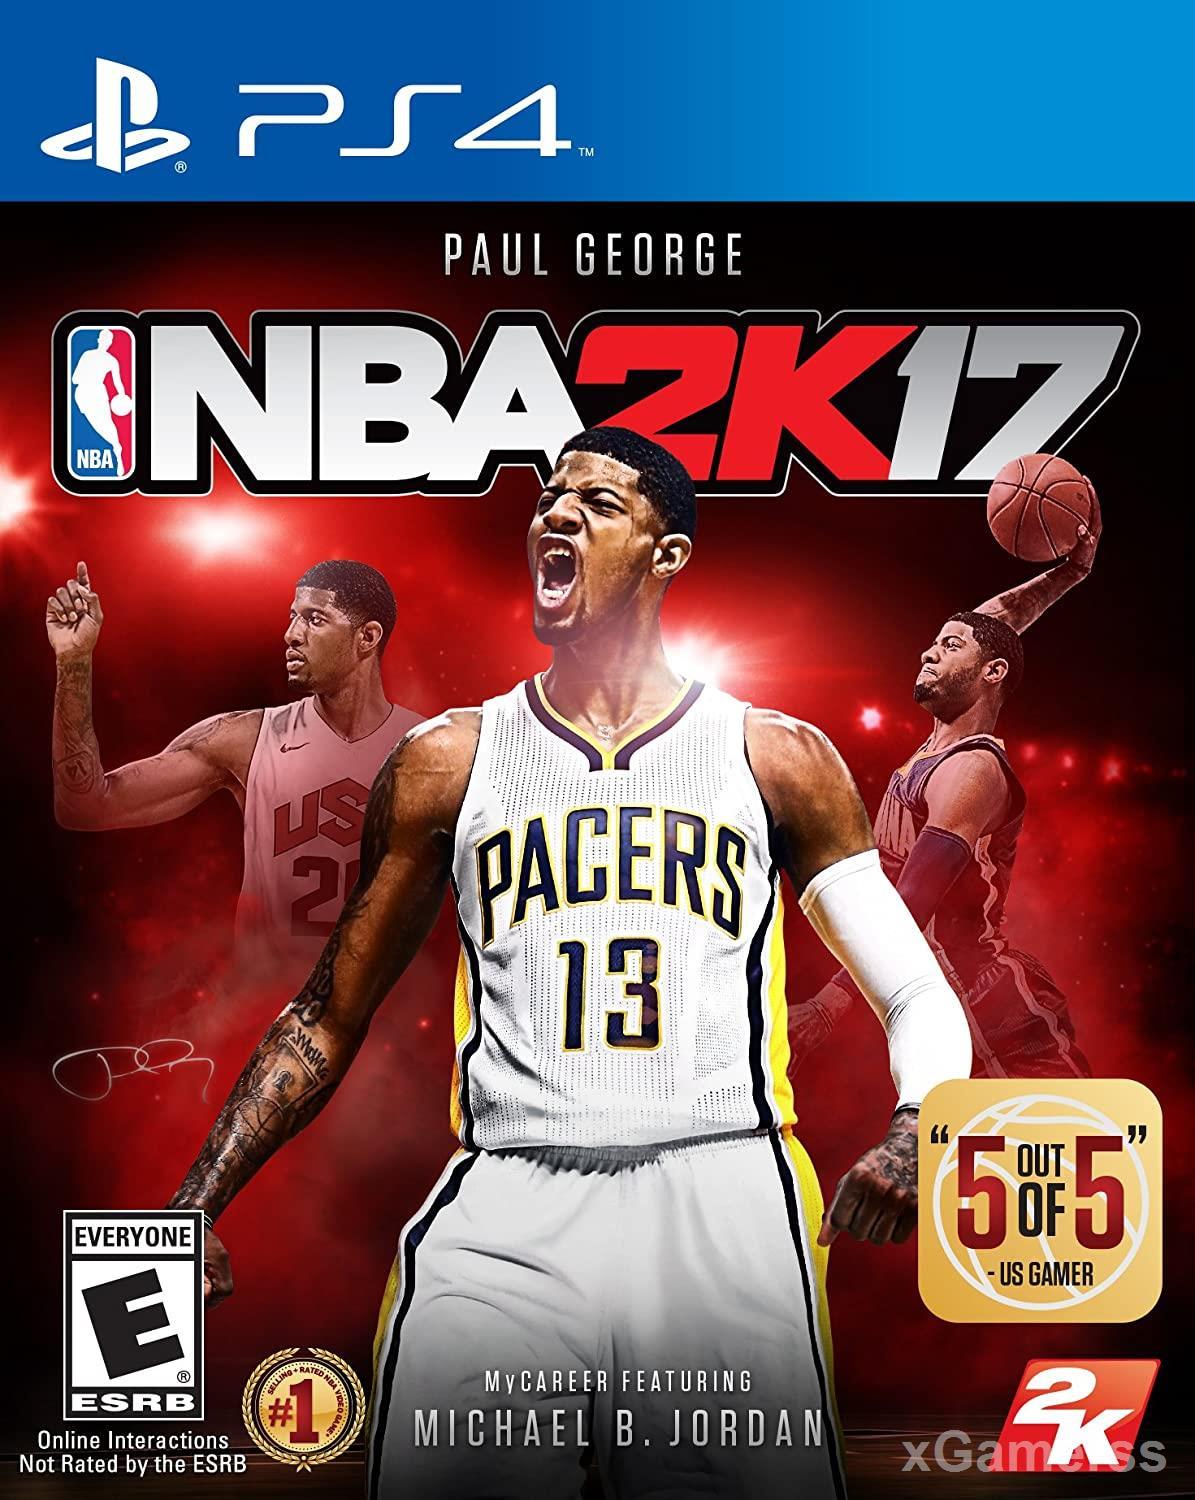 Best PS4 Basketball Game xGamerss